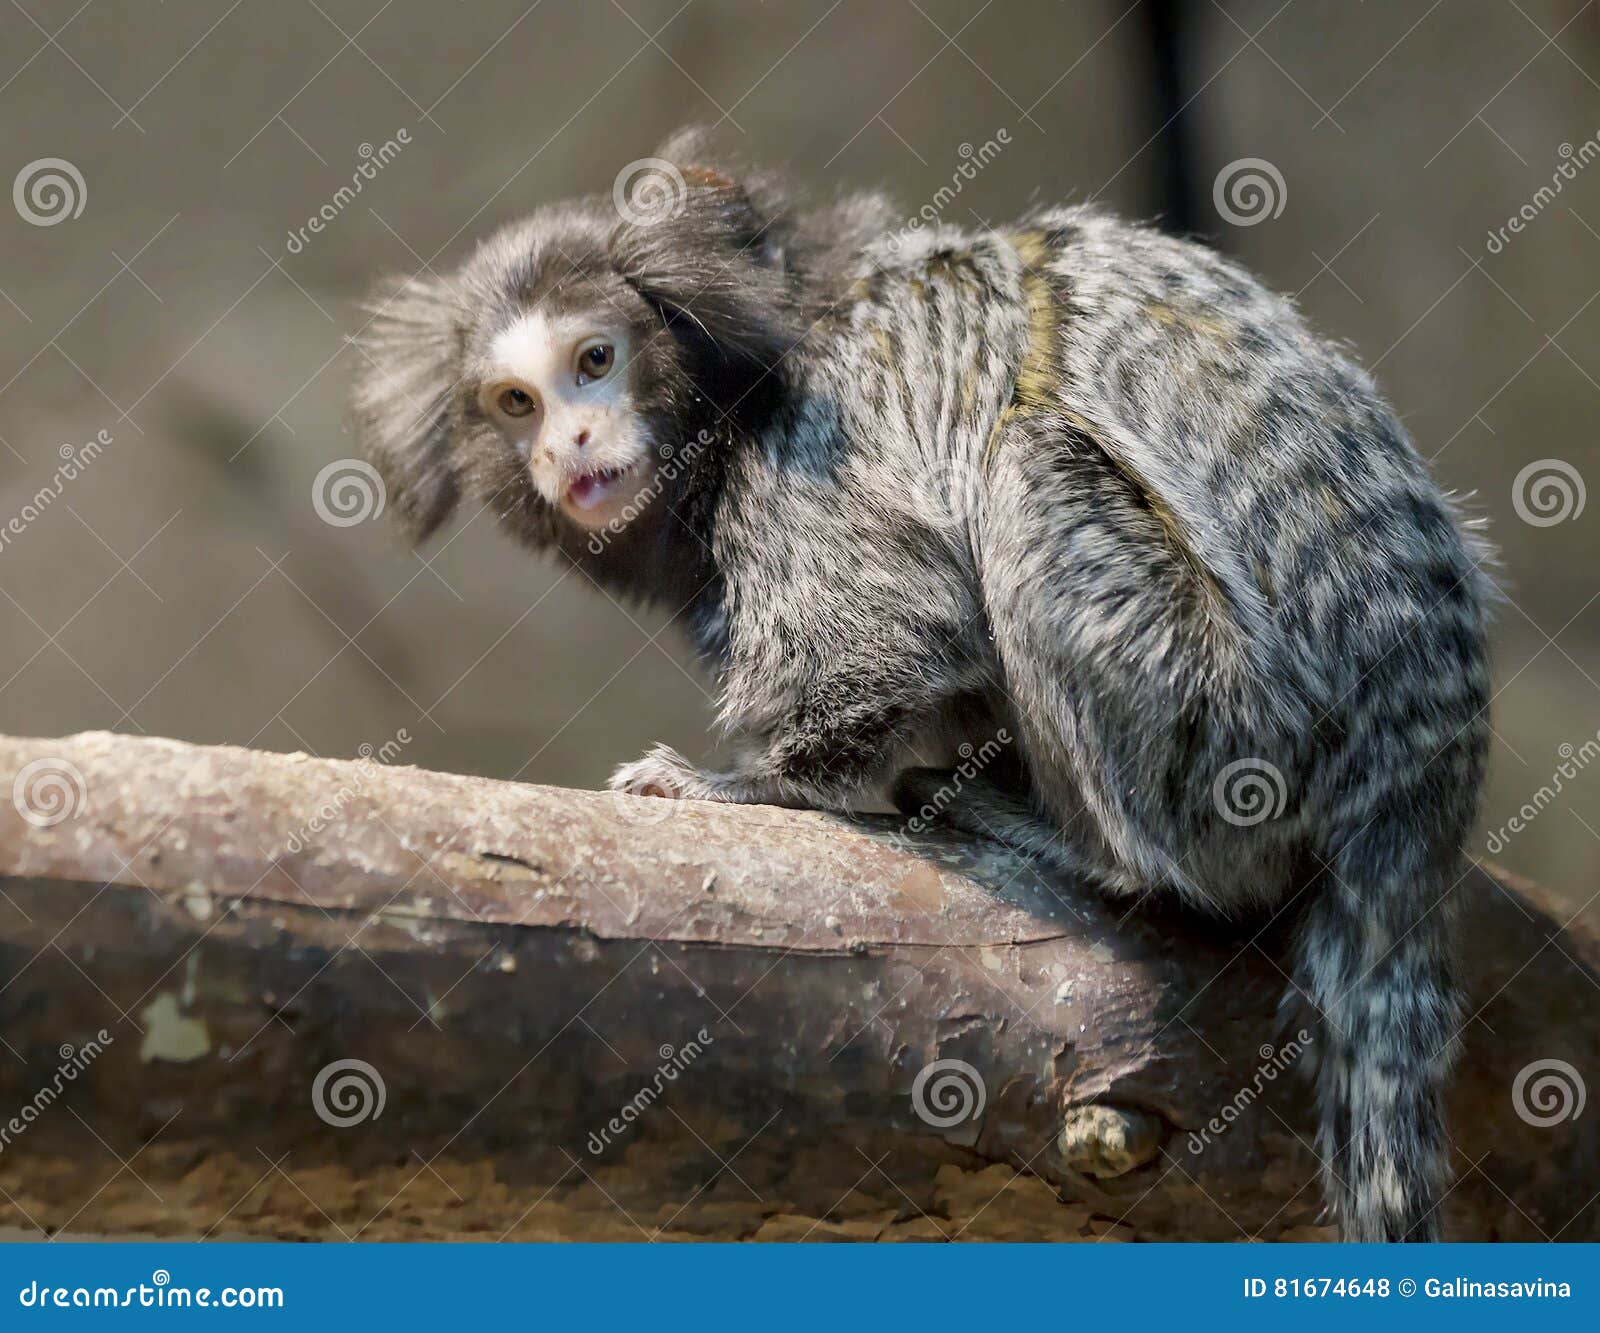 O menor macaco das Américas: Sagui-pigmeu (Cebuella pygmaea)